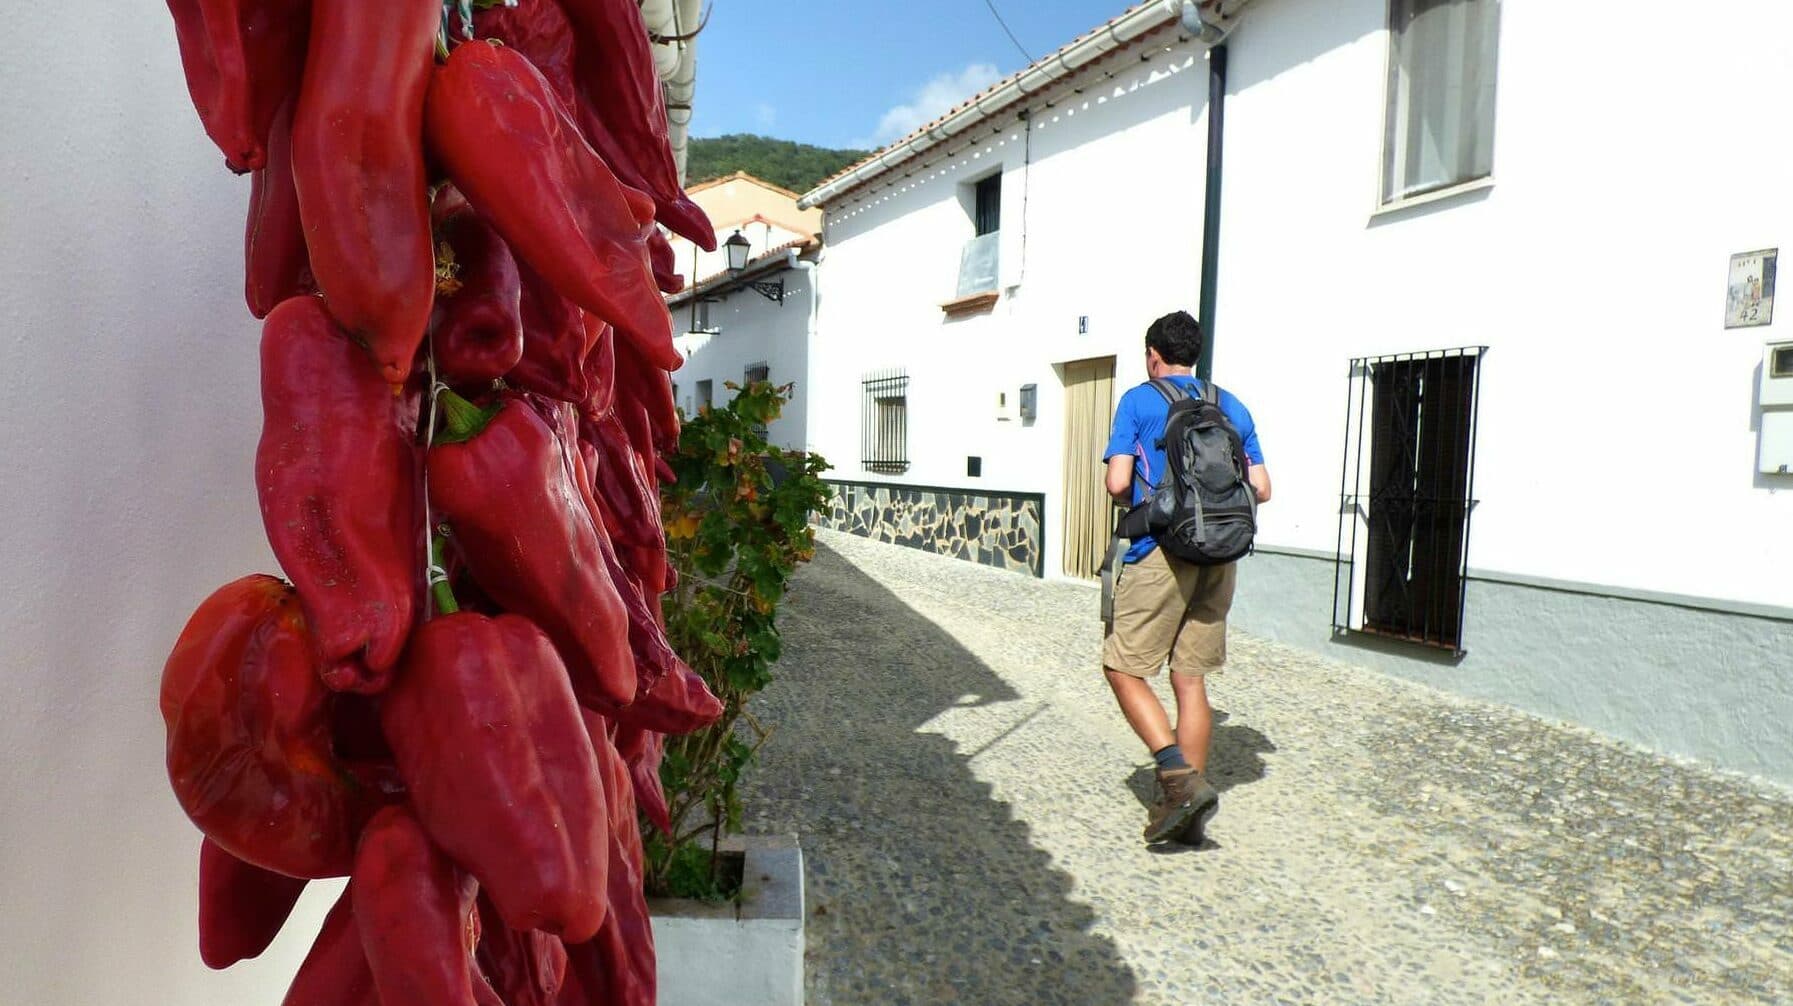 Spain andalucia aracena hills peppers in navahermosa village